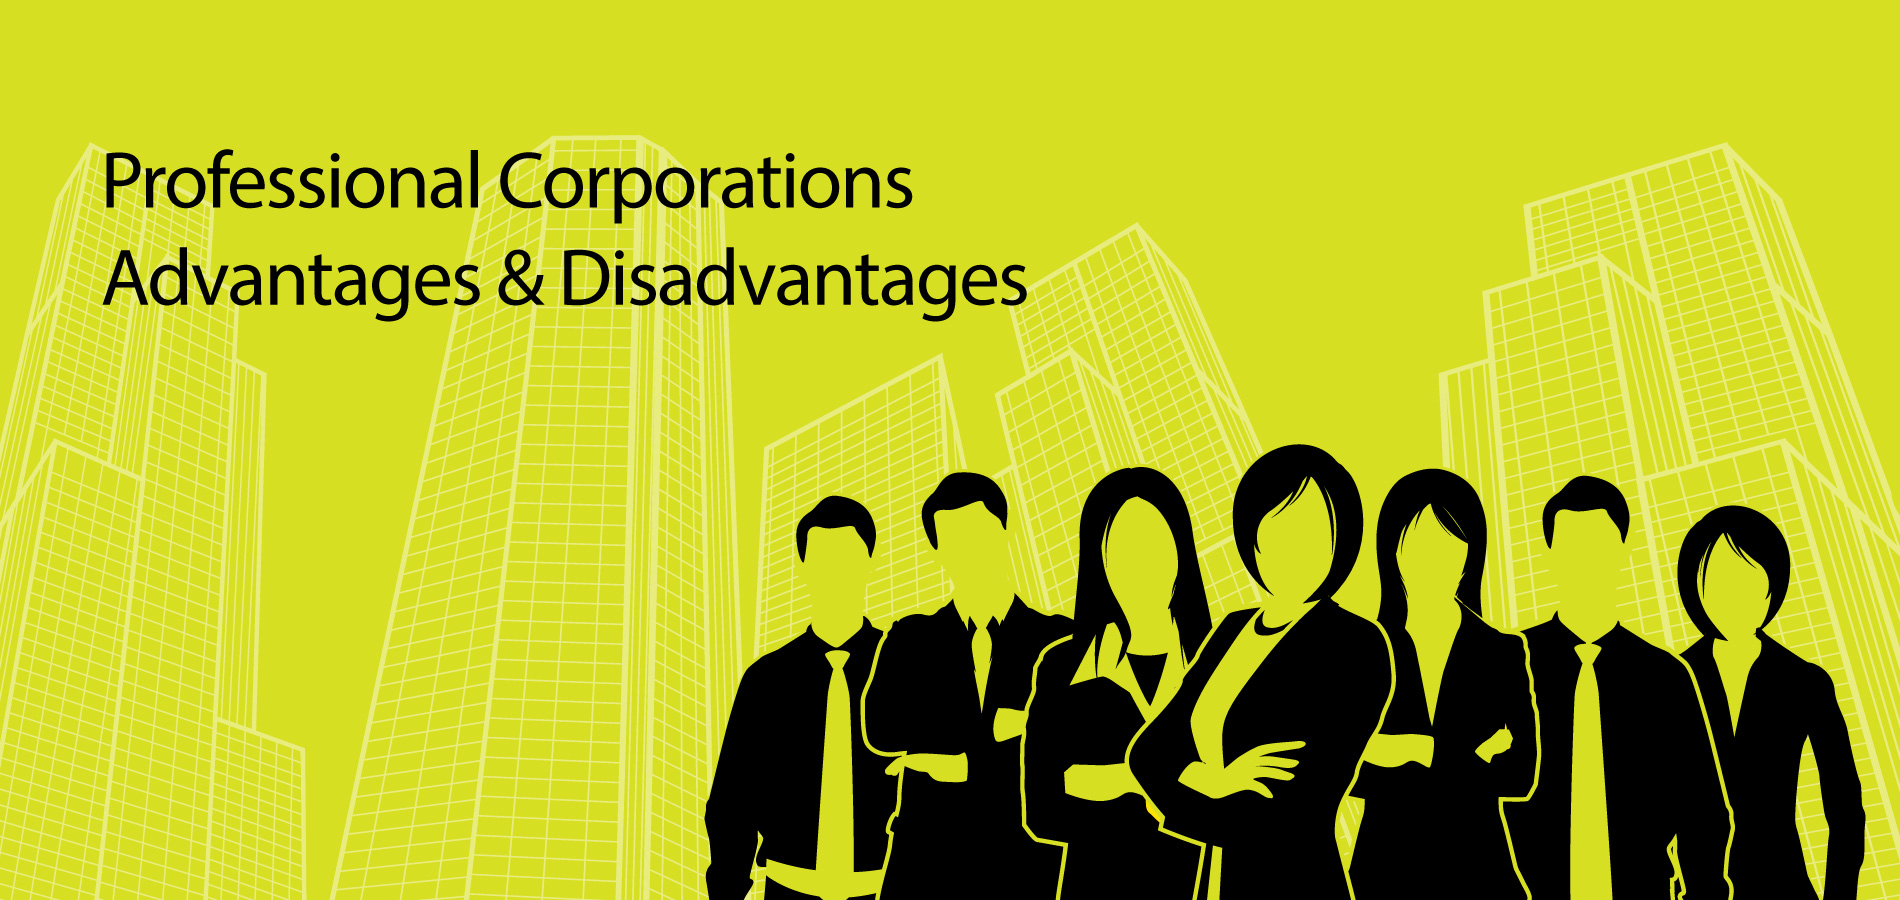 Professional Corporations Advantages and Disadvantages